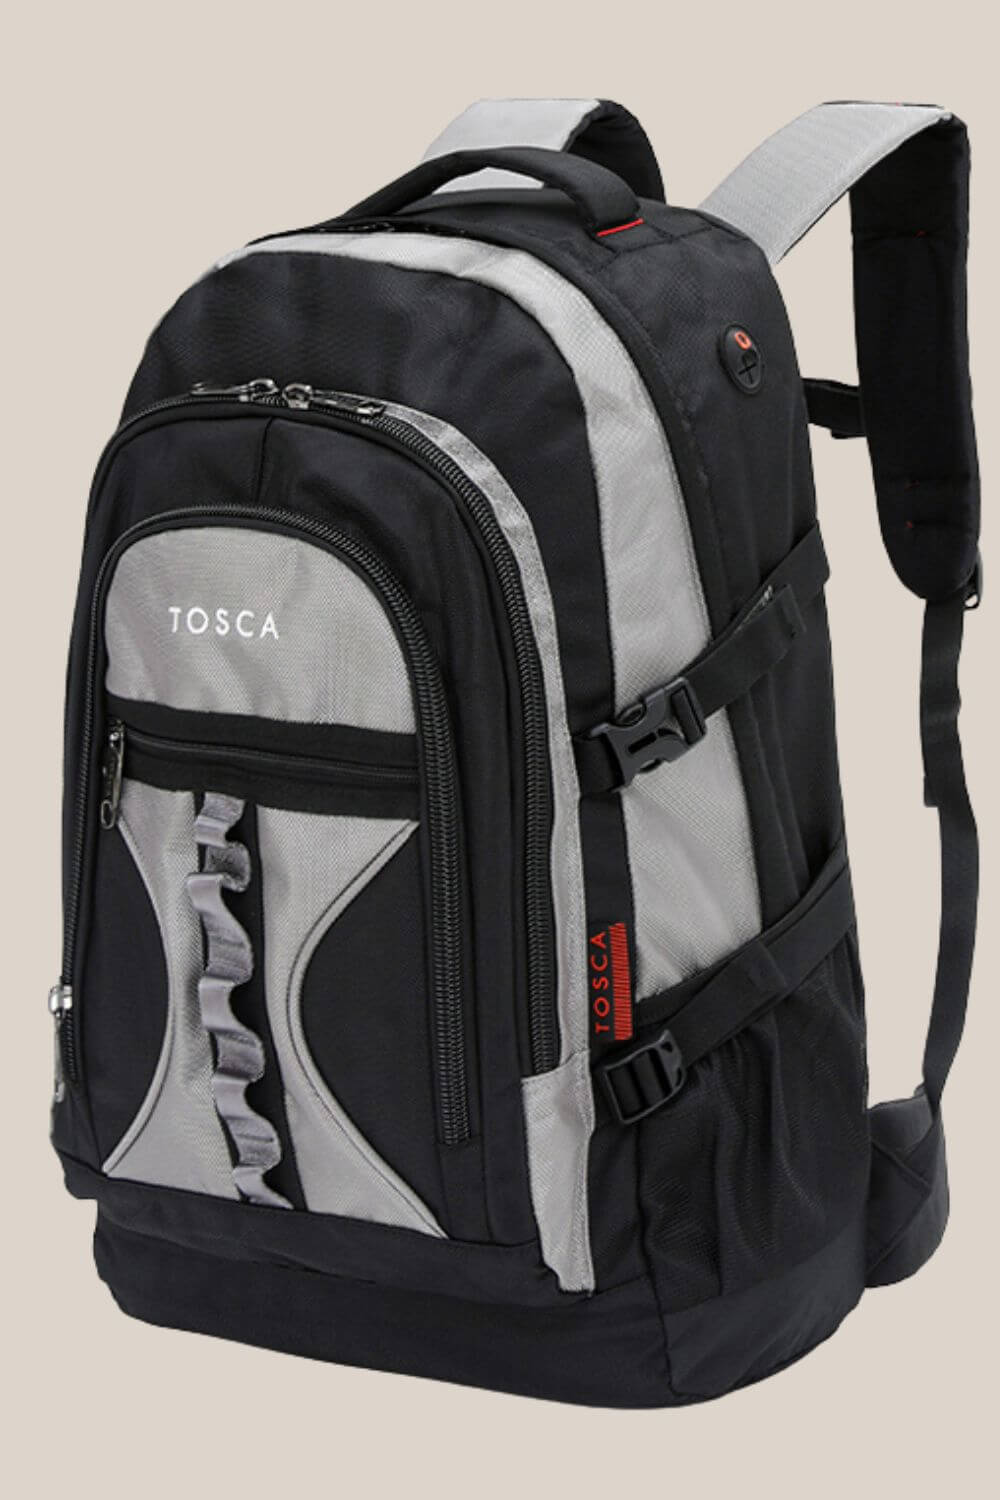 Tosca 50LT Deluxe Backpack